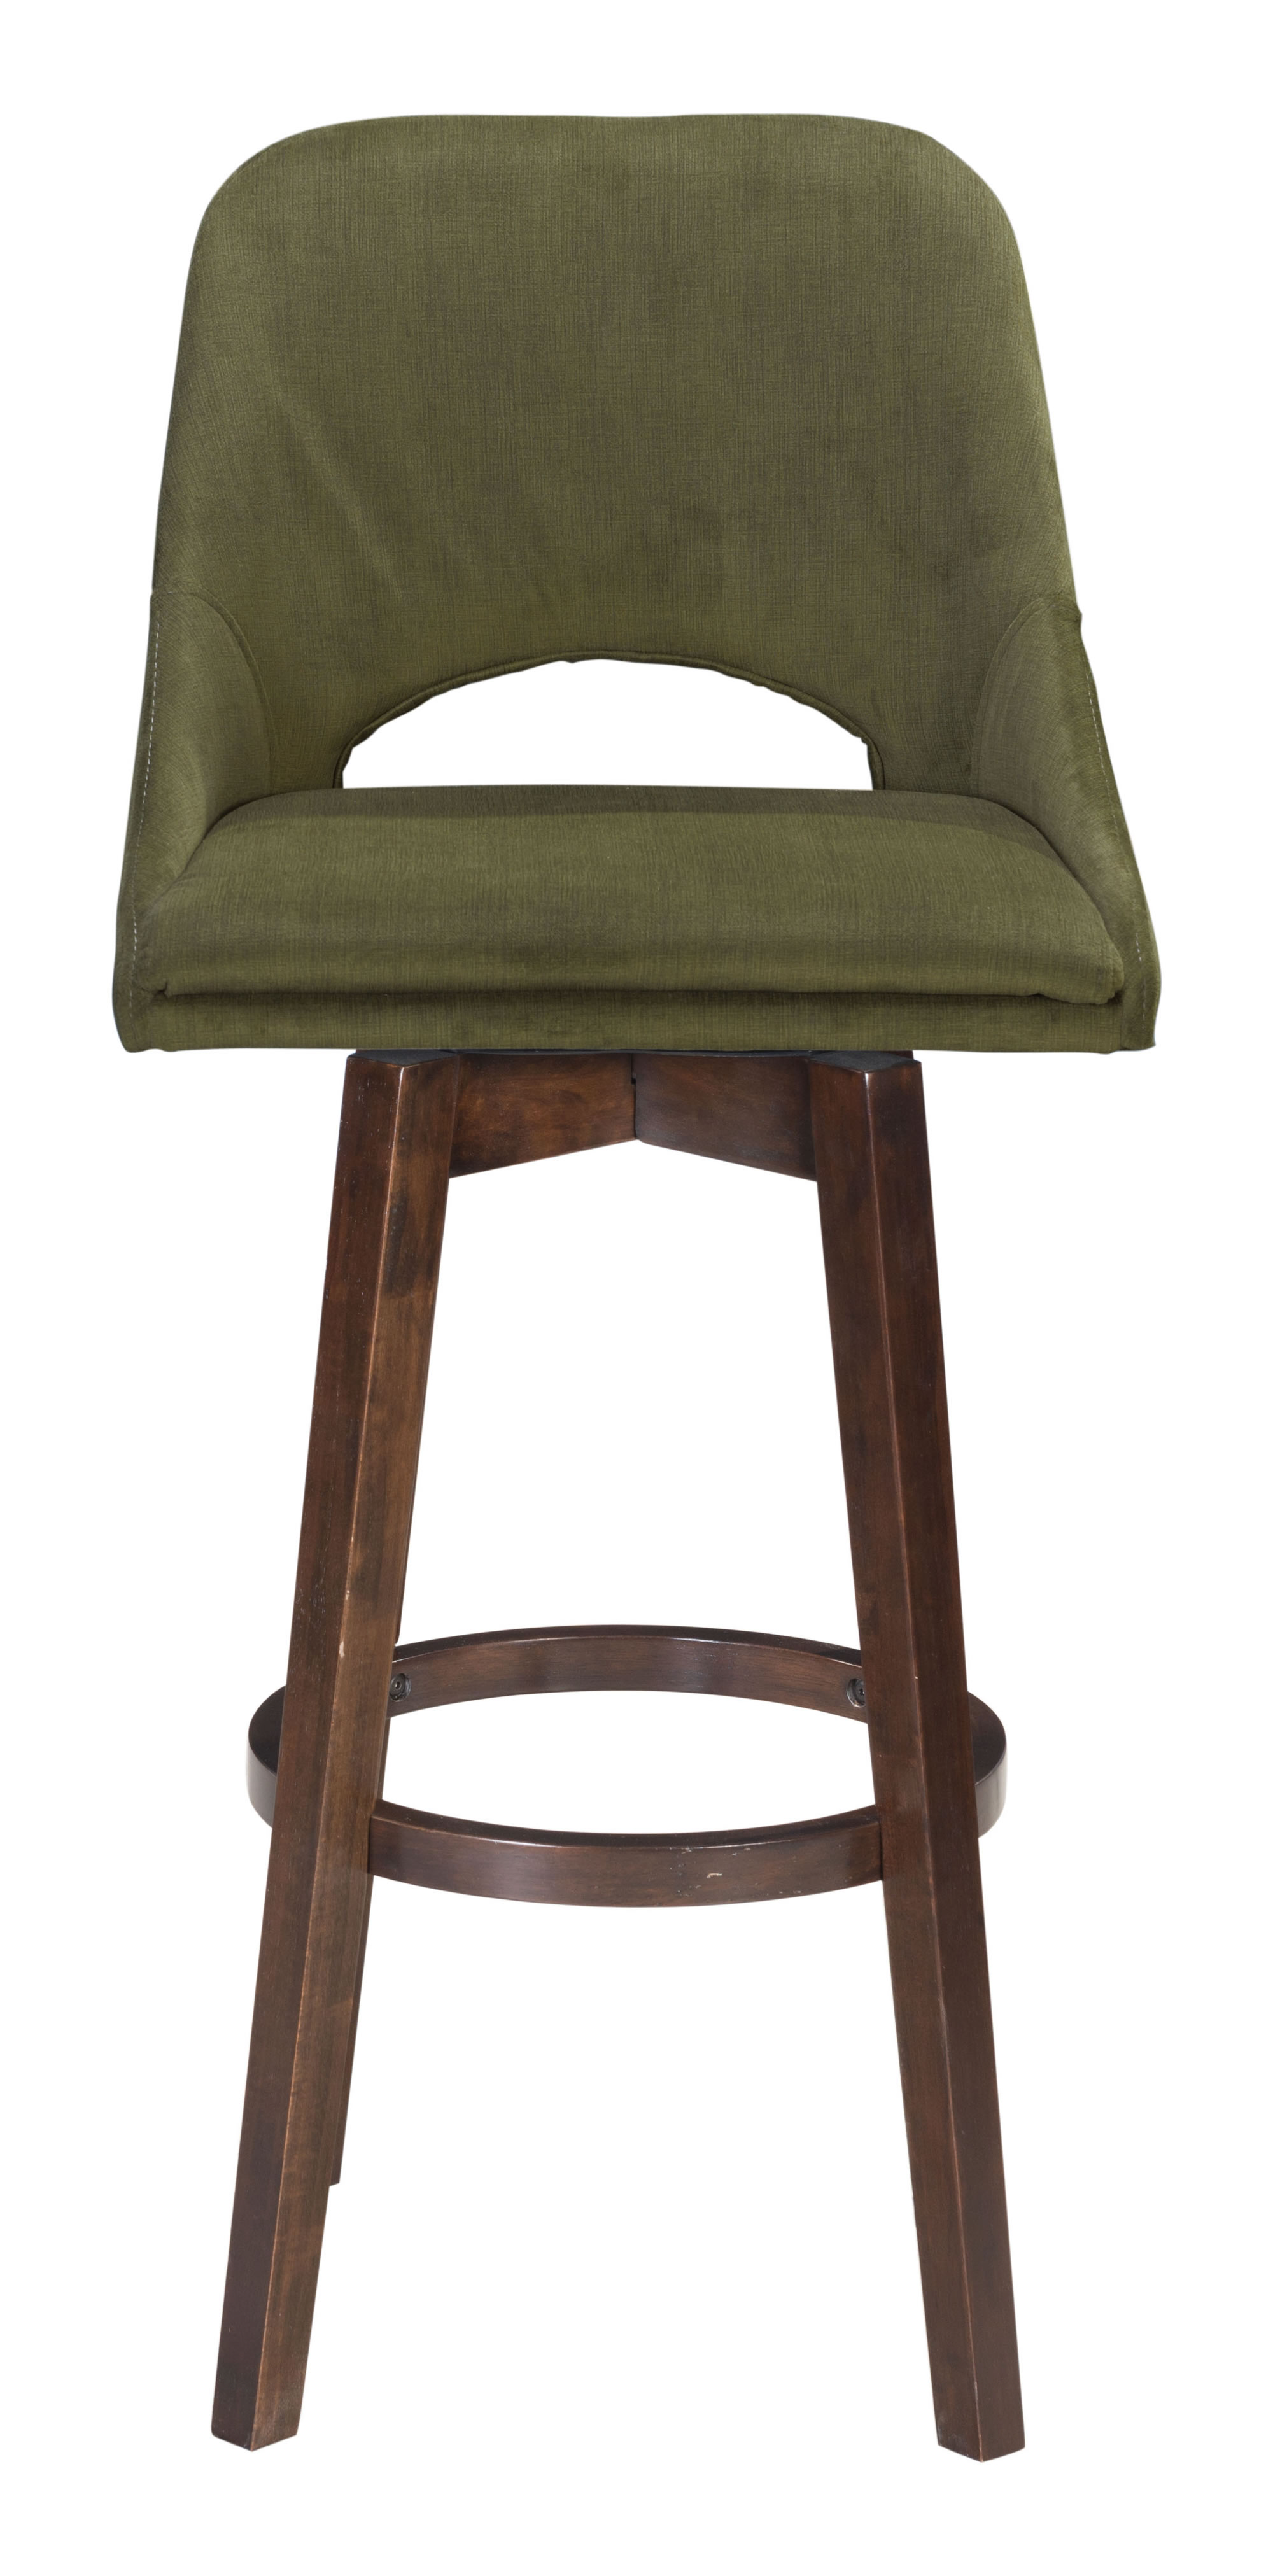 19.1" x 20.1" x 42.9" Green, Poly Linen, MDF, Rubberwood, Bar Chair